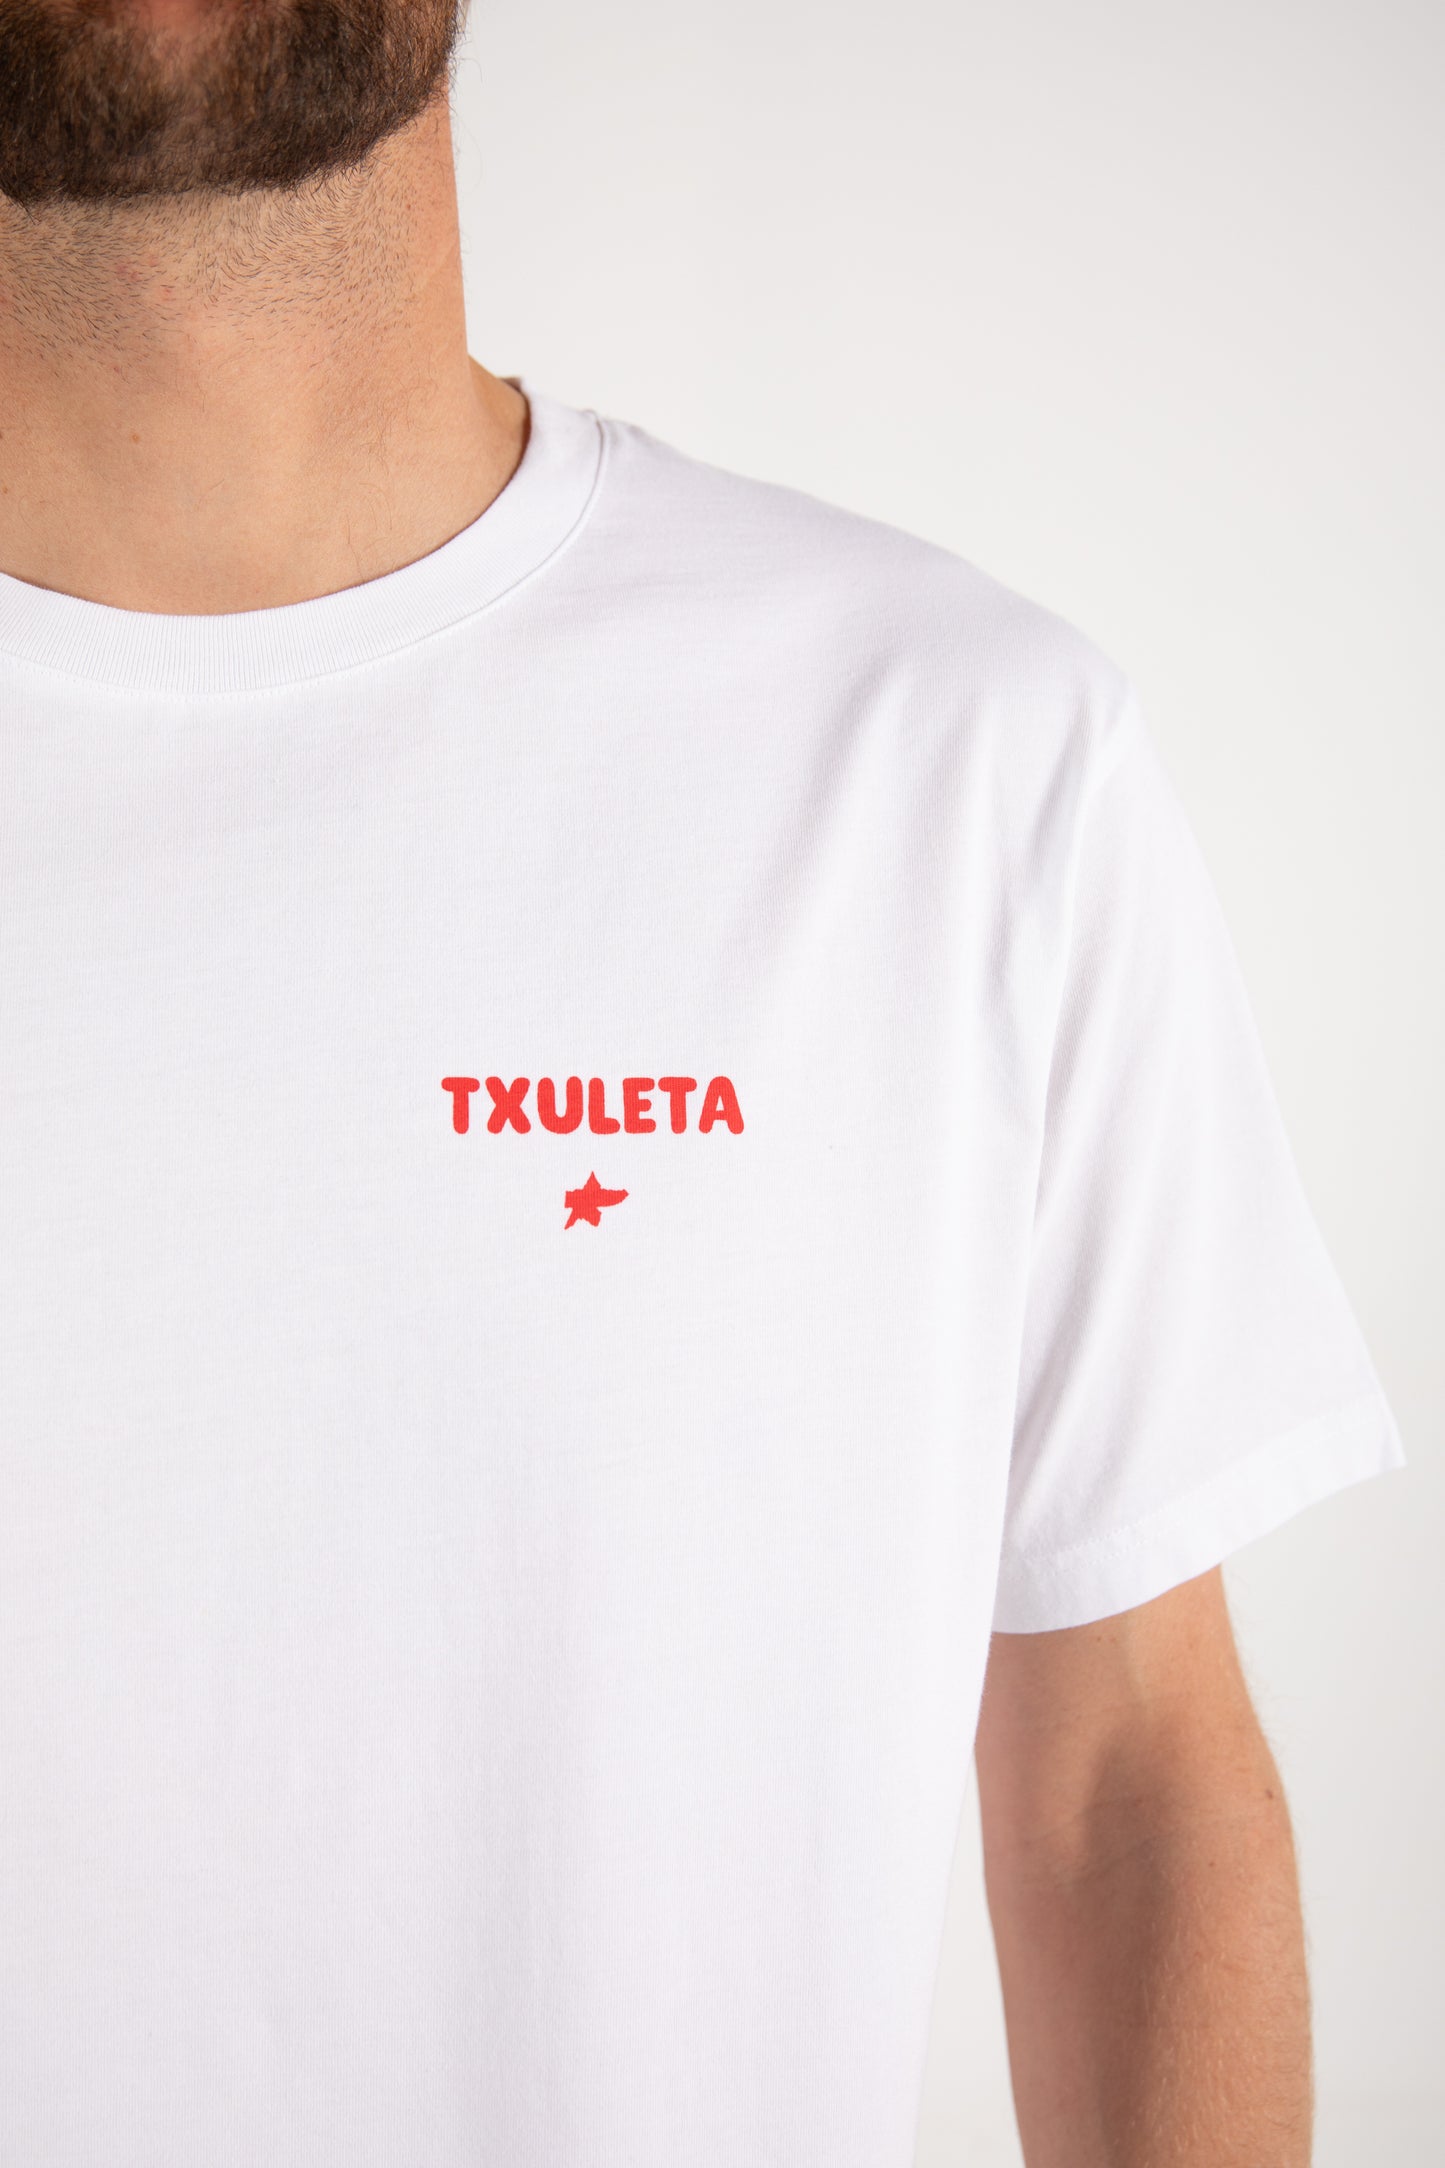 
                  
                    Pukas-Surf-Shop-Surfing-The-Basque-Country-txuleta-tee-man-white
                  
                